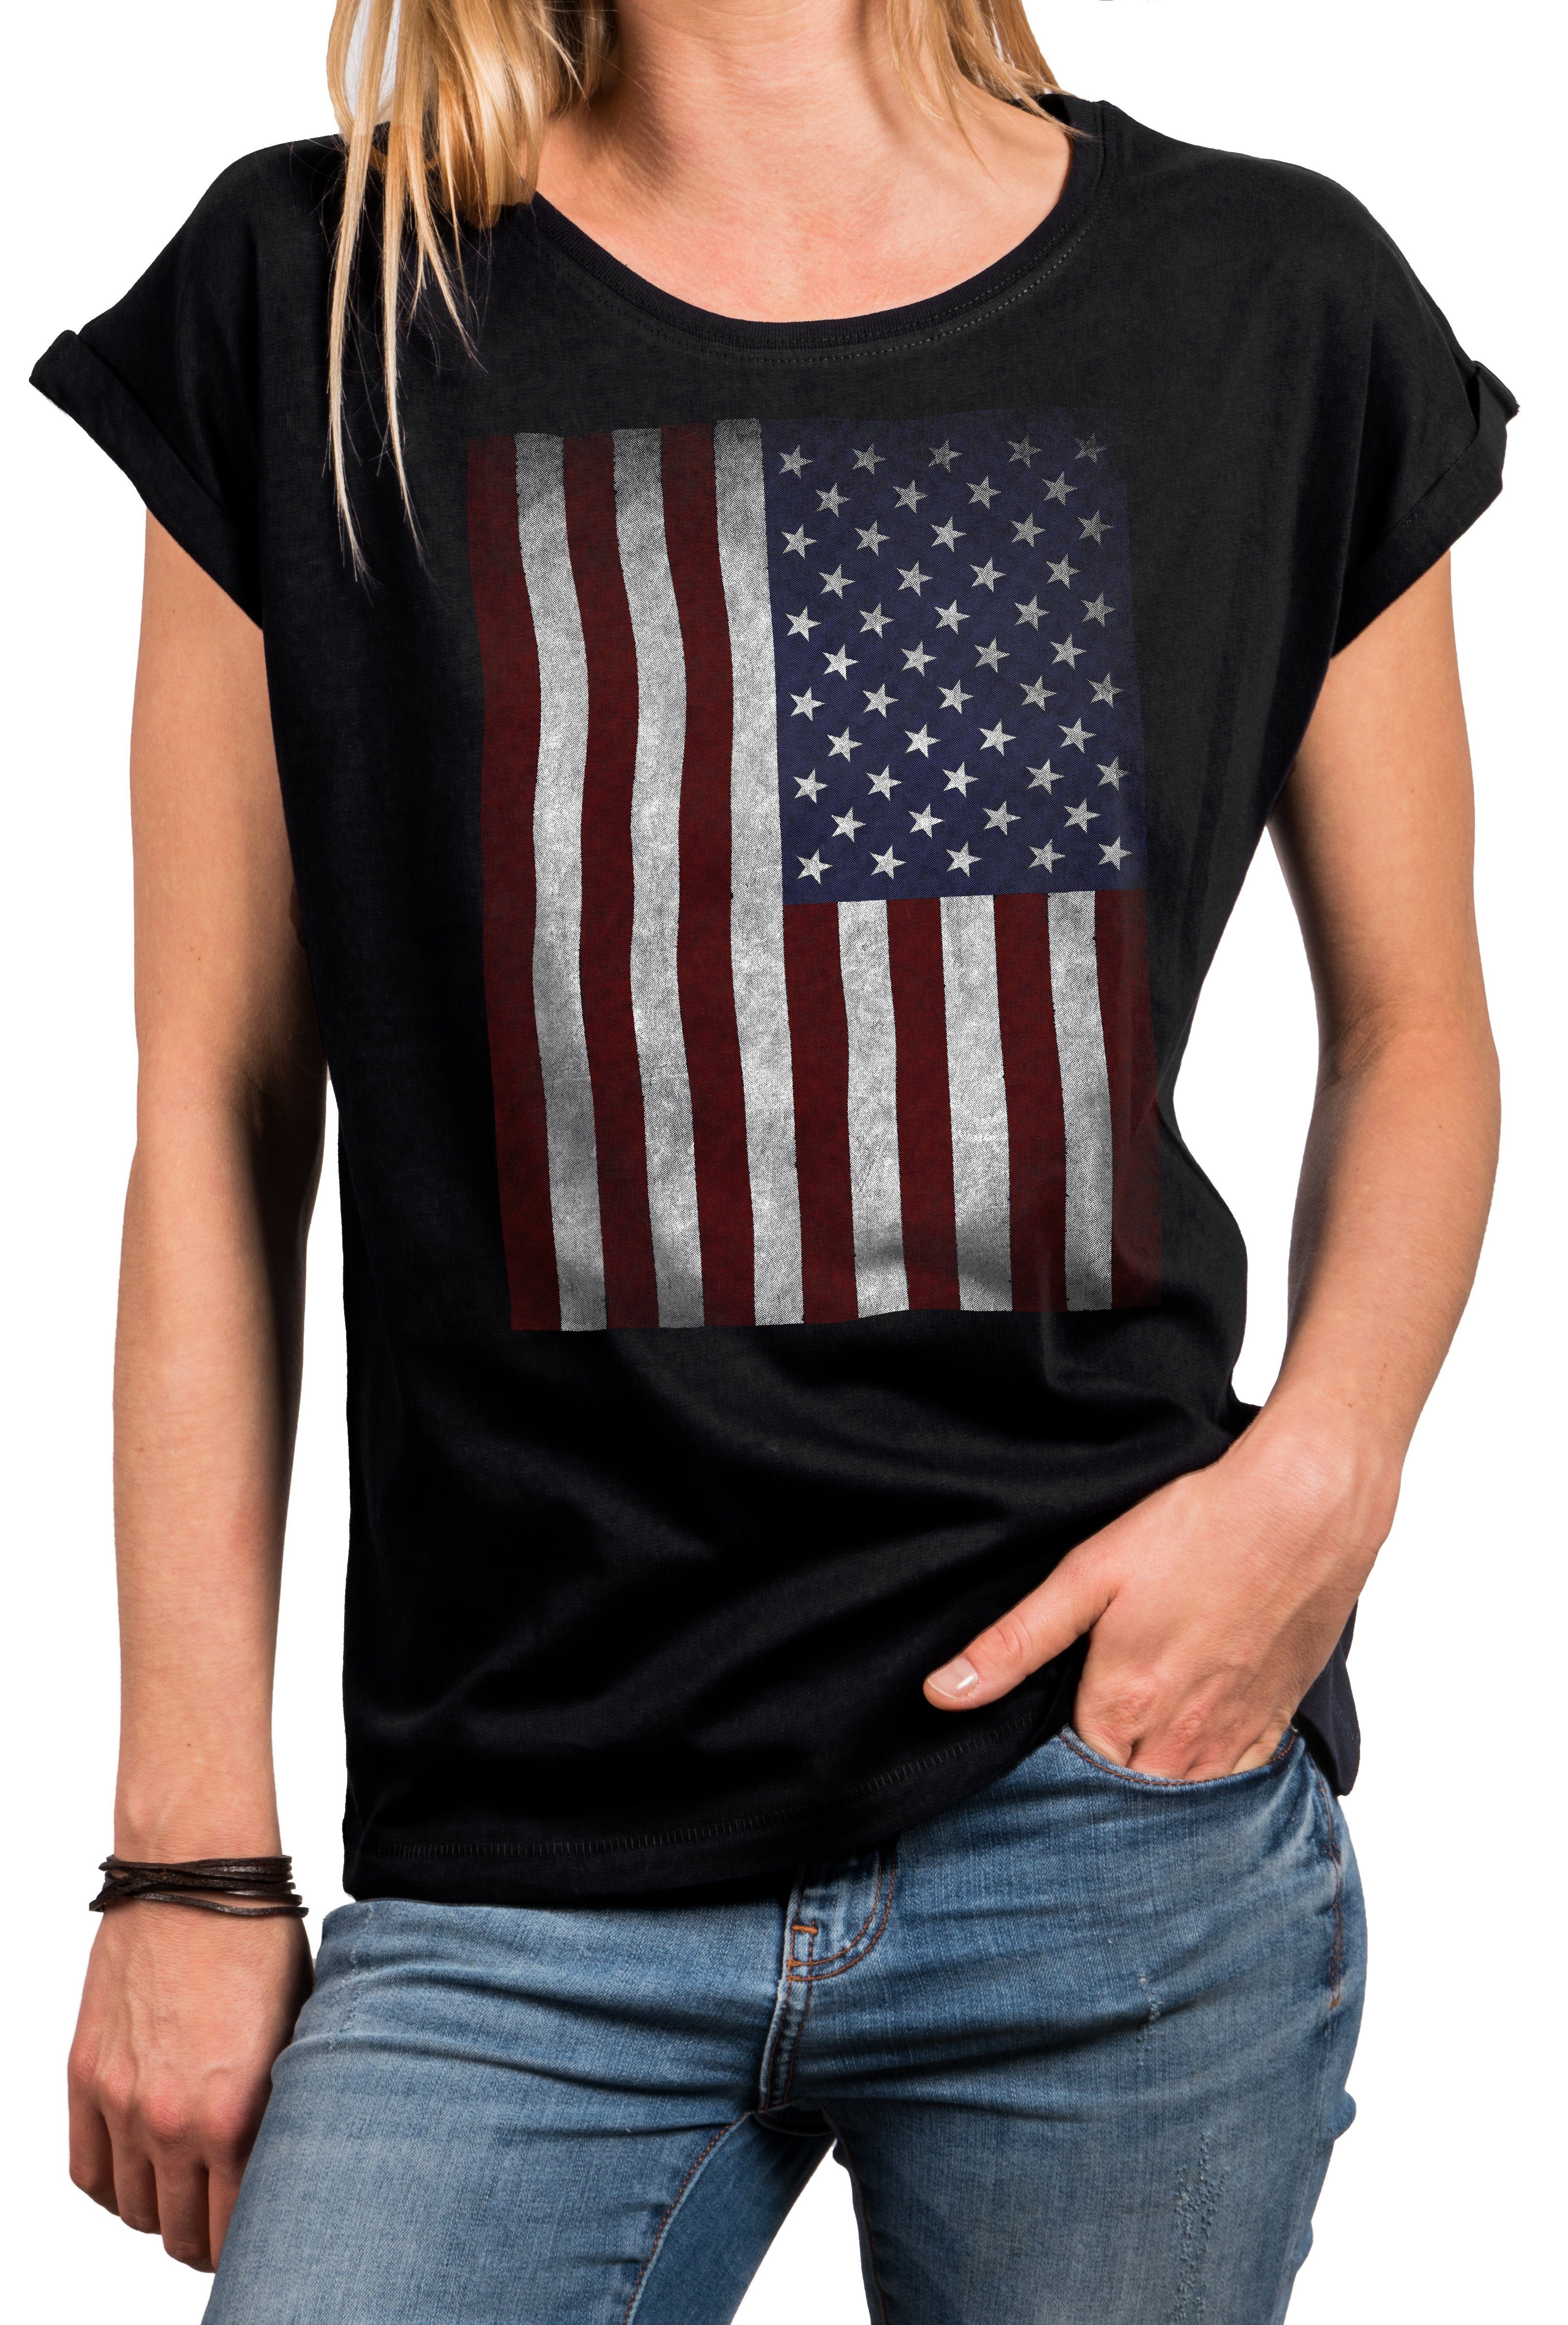 MAKAYA Print-Shirt Sommer USA große blau) Amerika Größen Flagge Vintage (Kurzarm, schwarz, Oberteile Top grau, Baumwolle, Tunika Damen Fahne